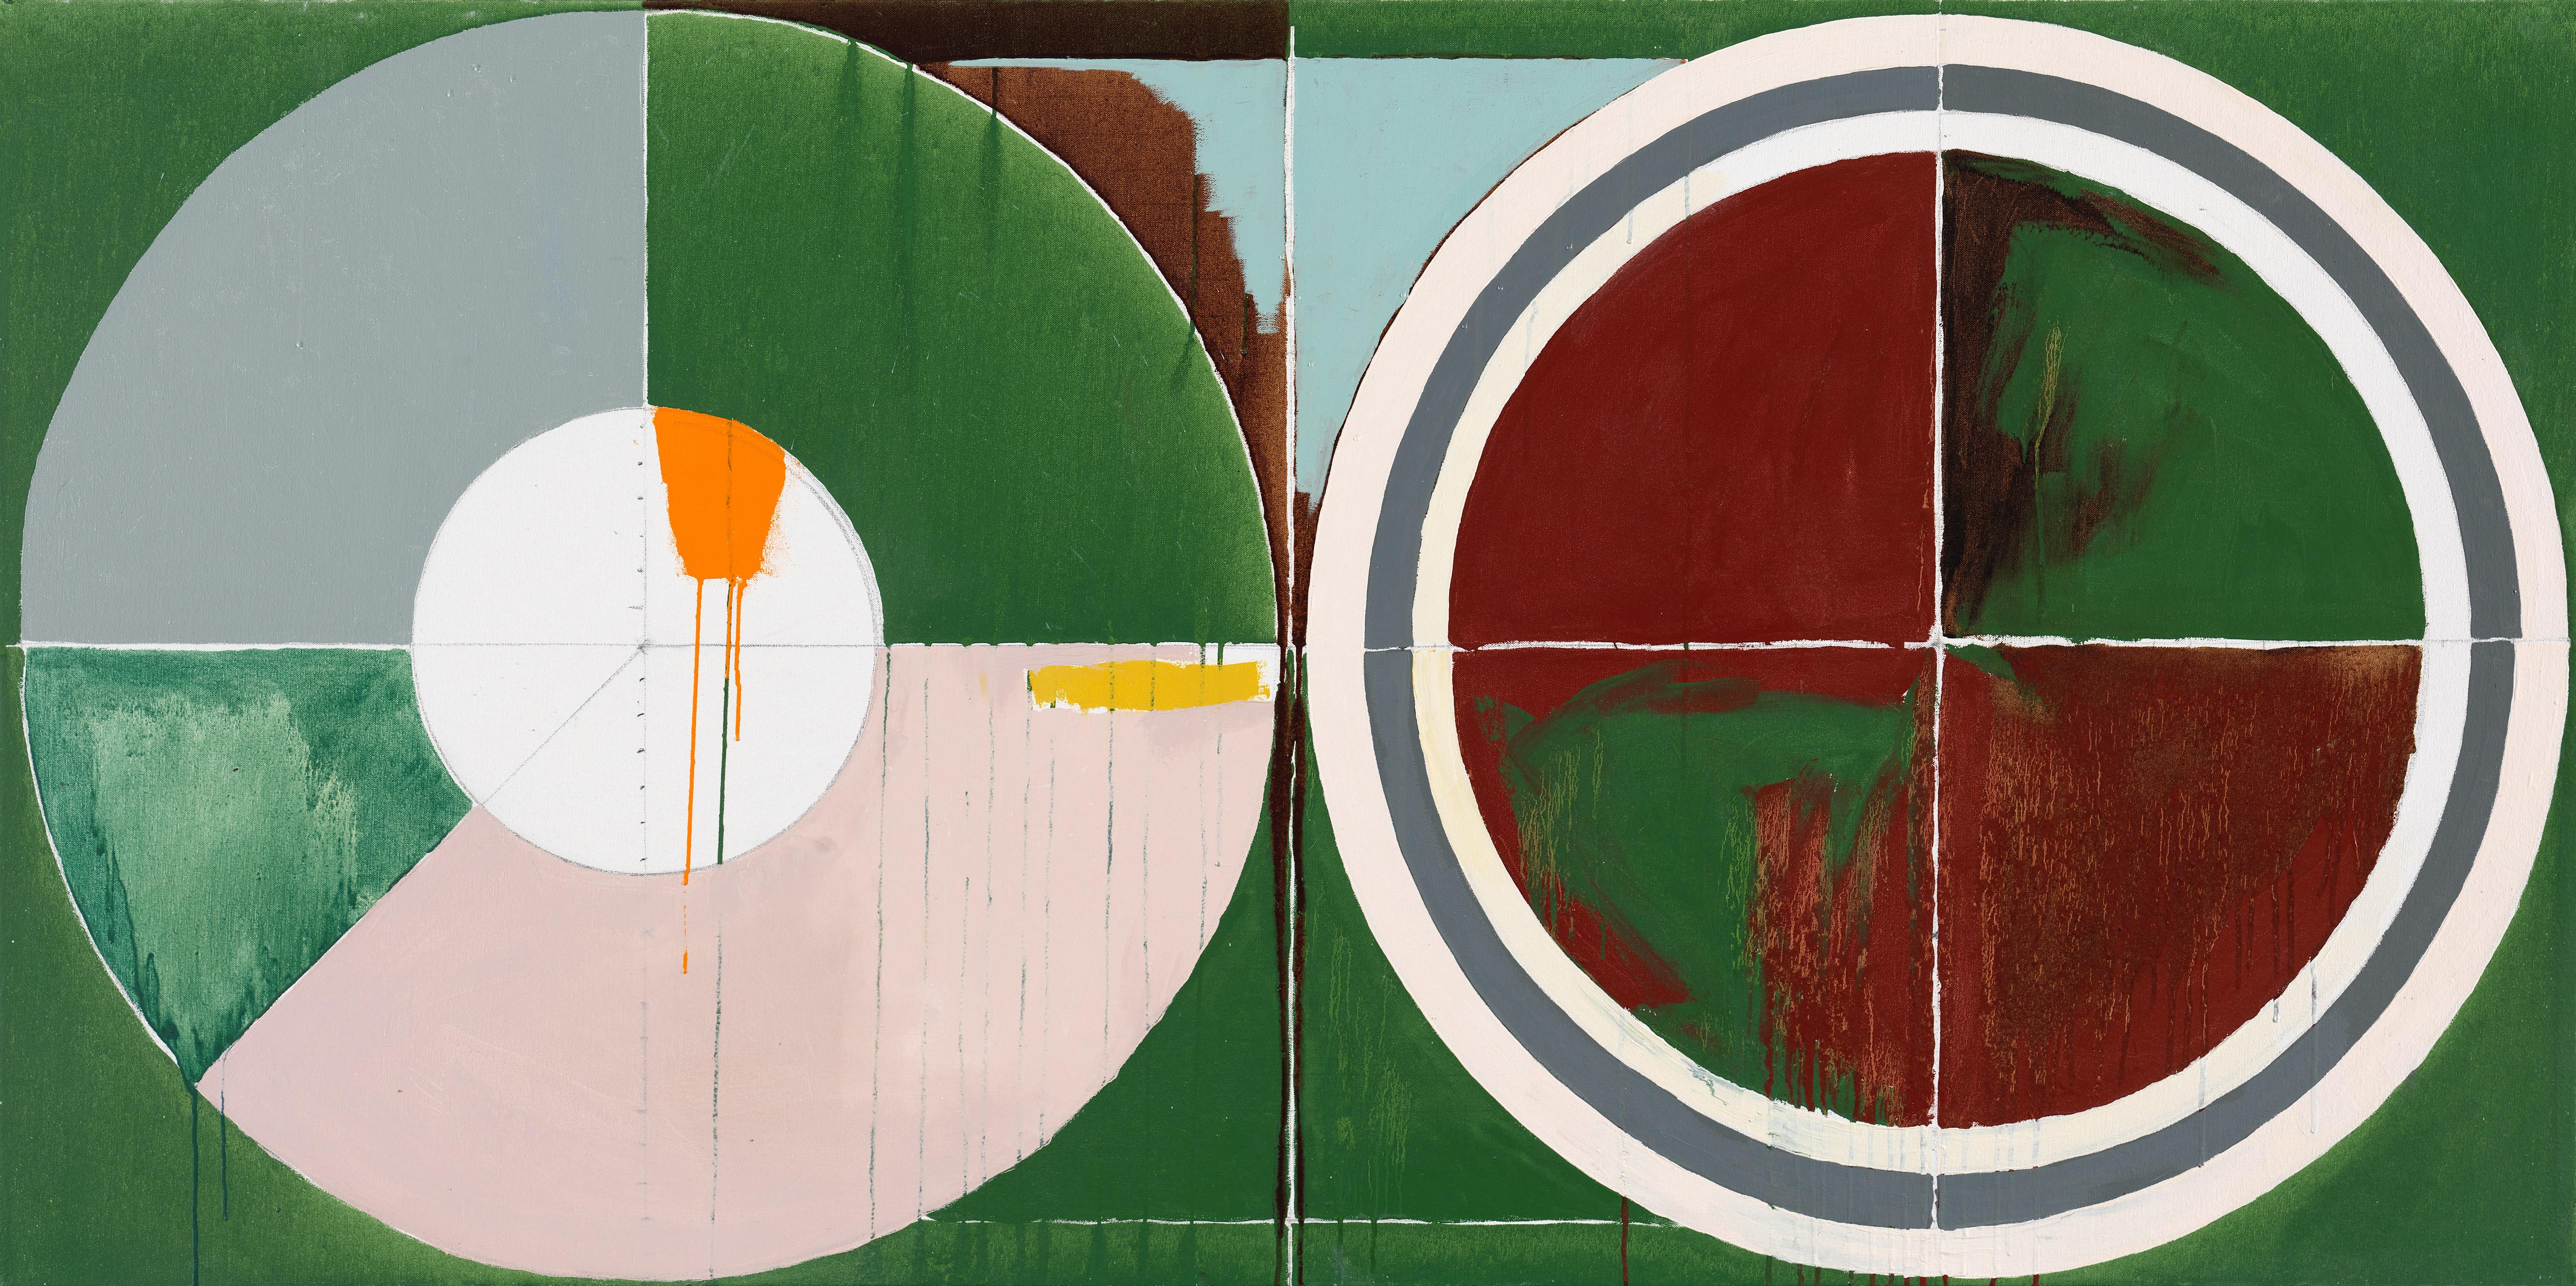 Javier Arizmendi-Kalb Abstract Painting - Landscape No. 3 / abstract geometry, architecture, farmland, 3x6 feet